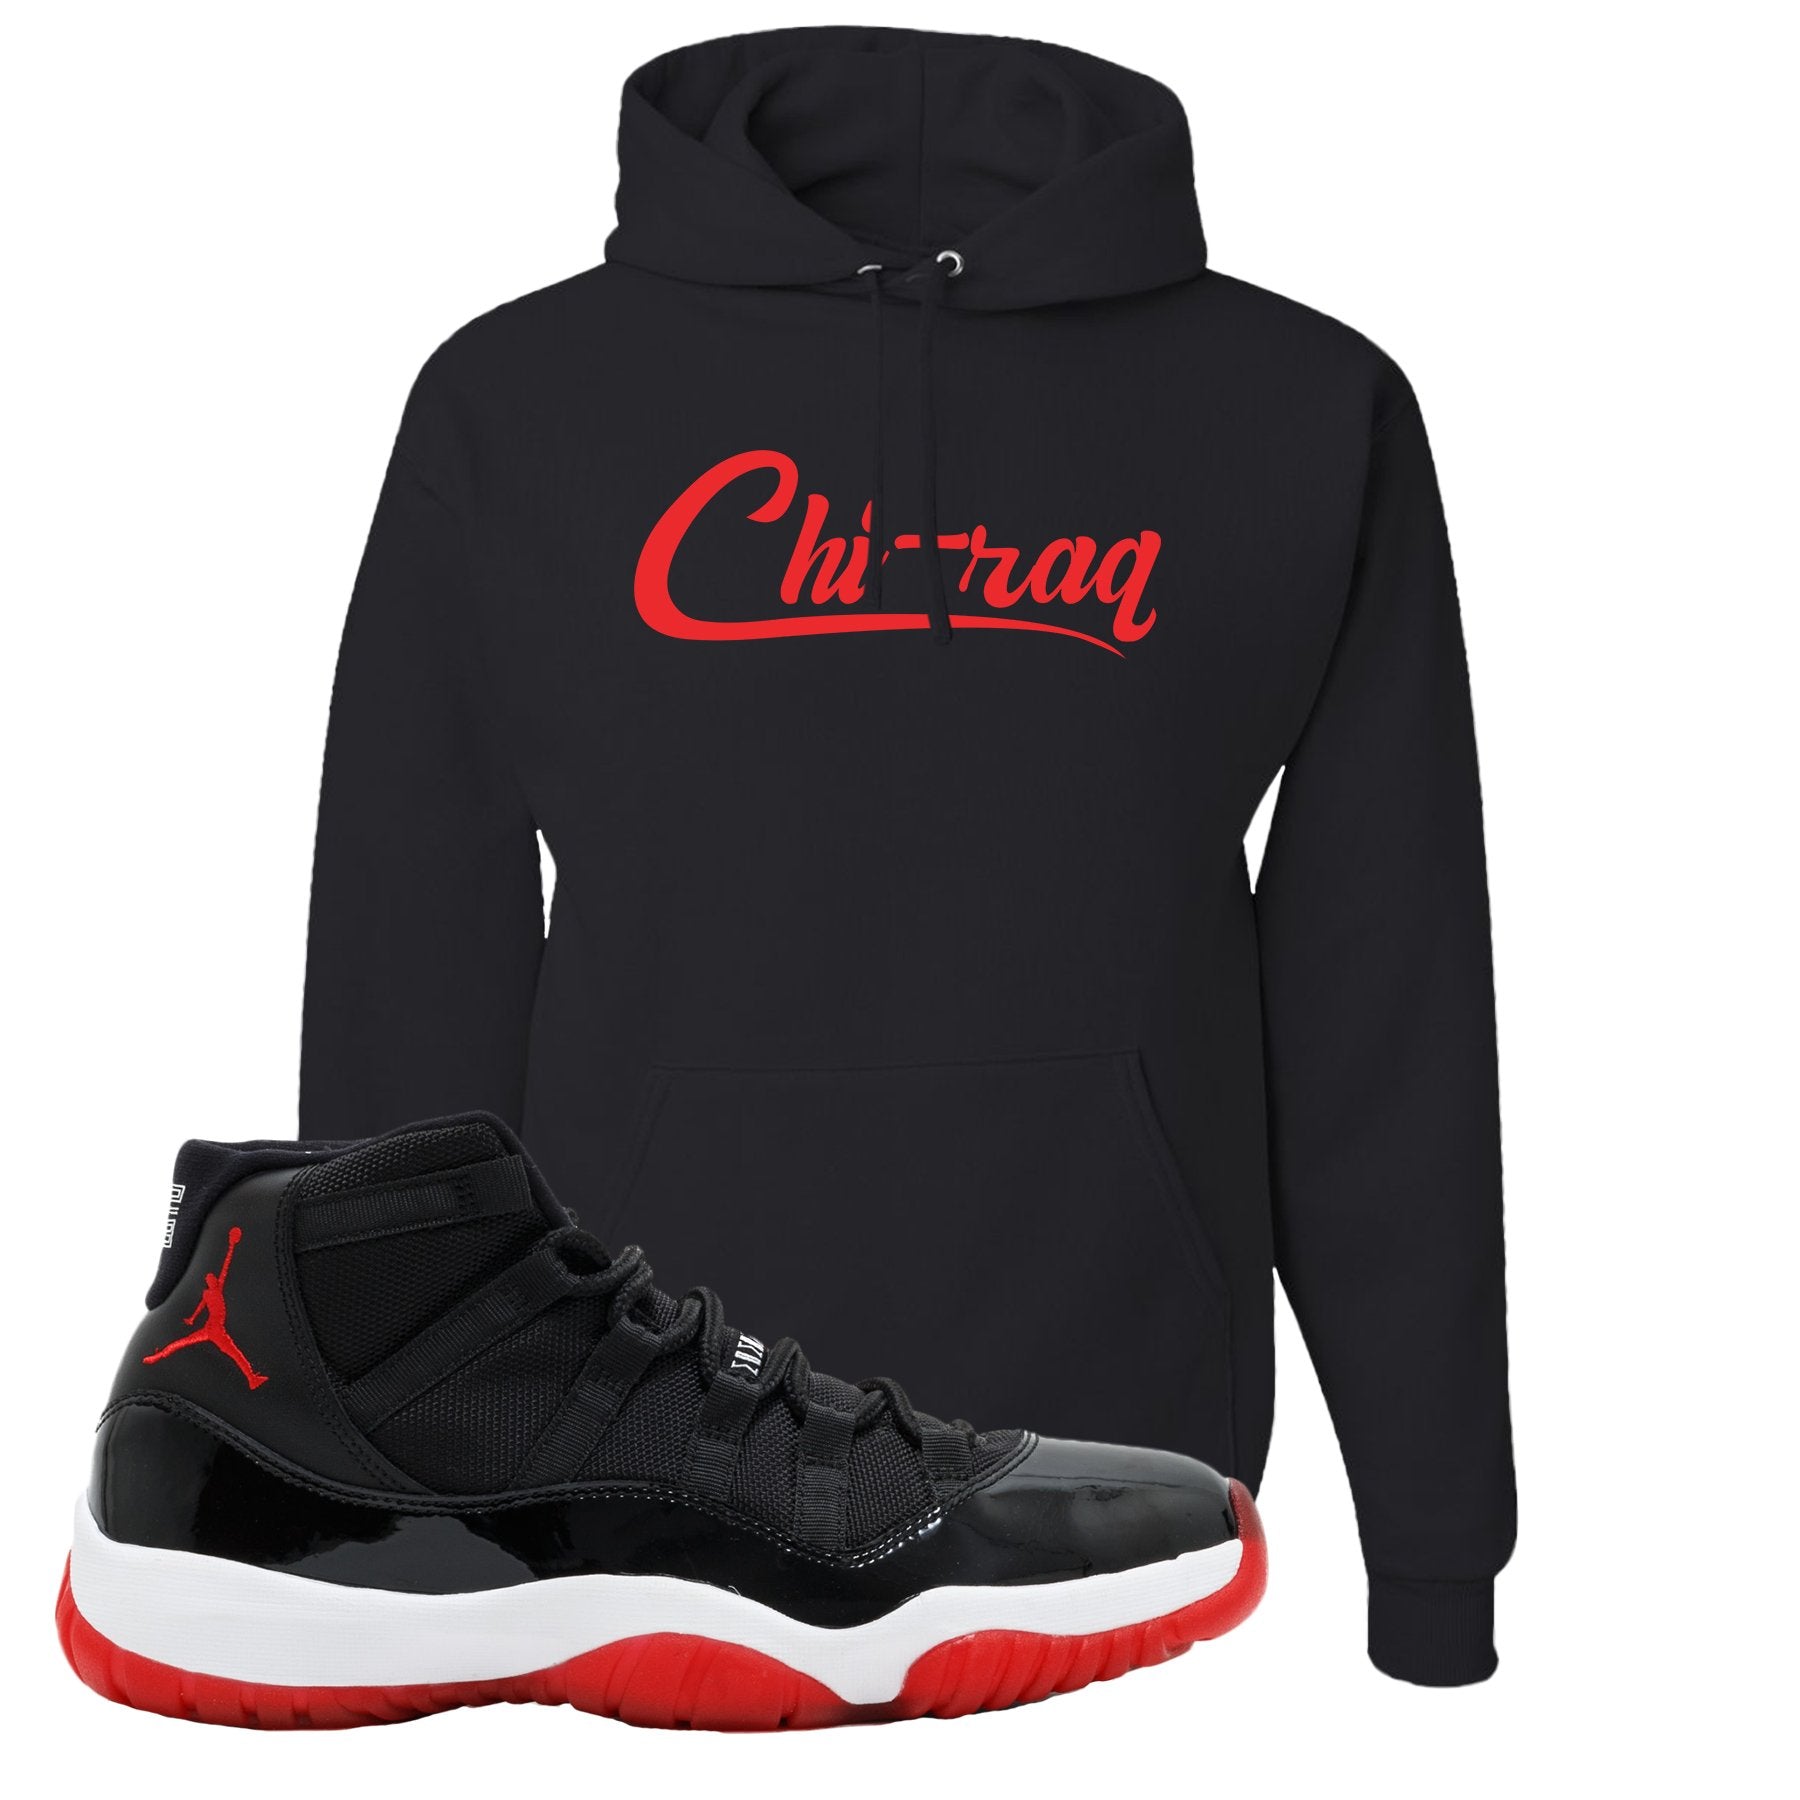 Jordan 11 Bred Chi-raq Black Sneaker Hook Up Pullover Hoodie